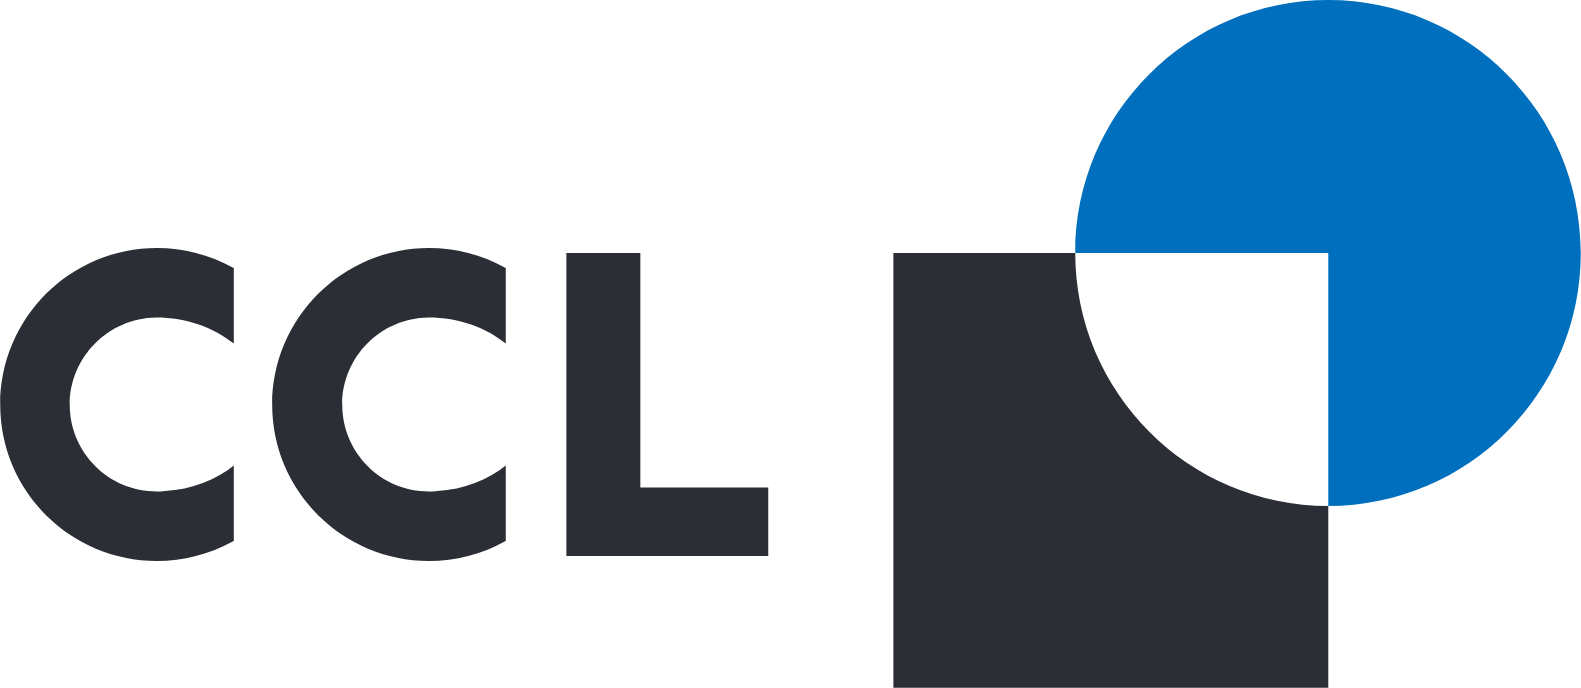 CCL Industries logo large (transparent PNG)